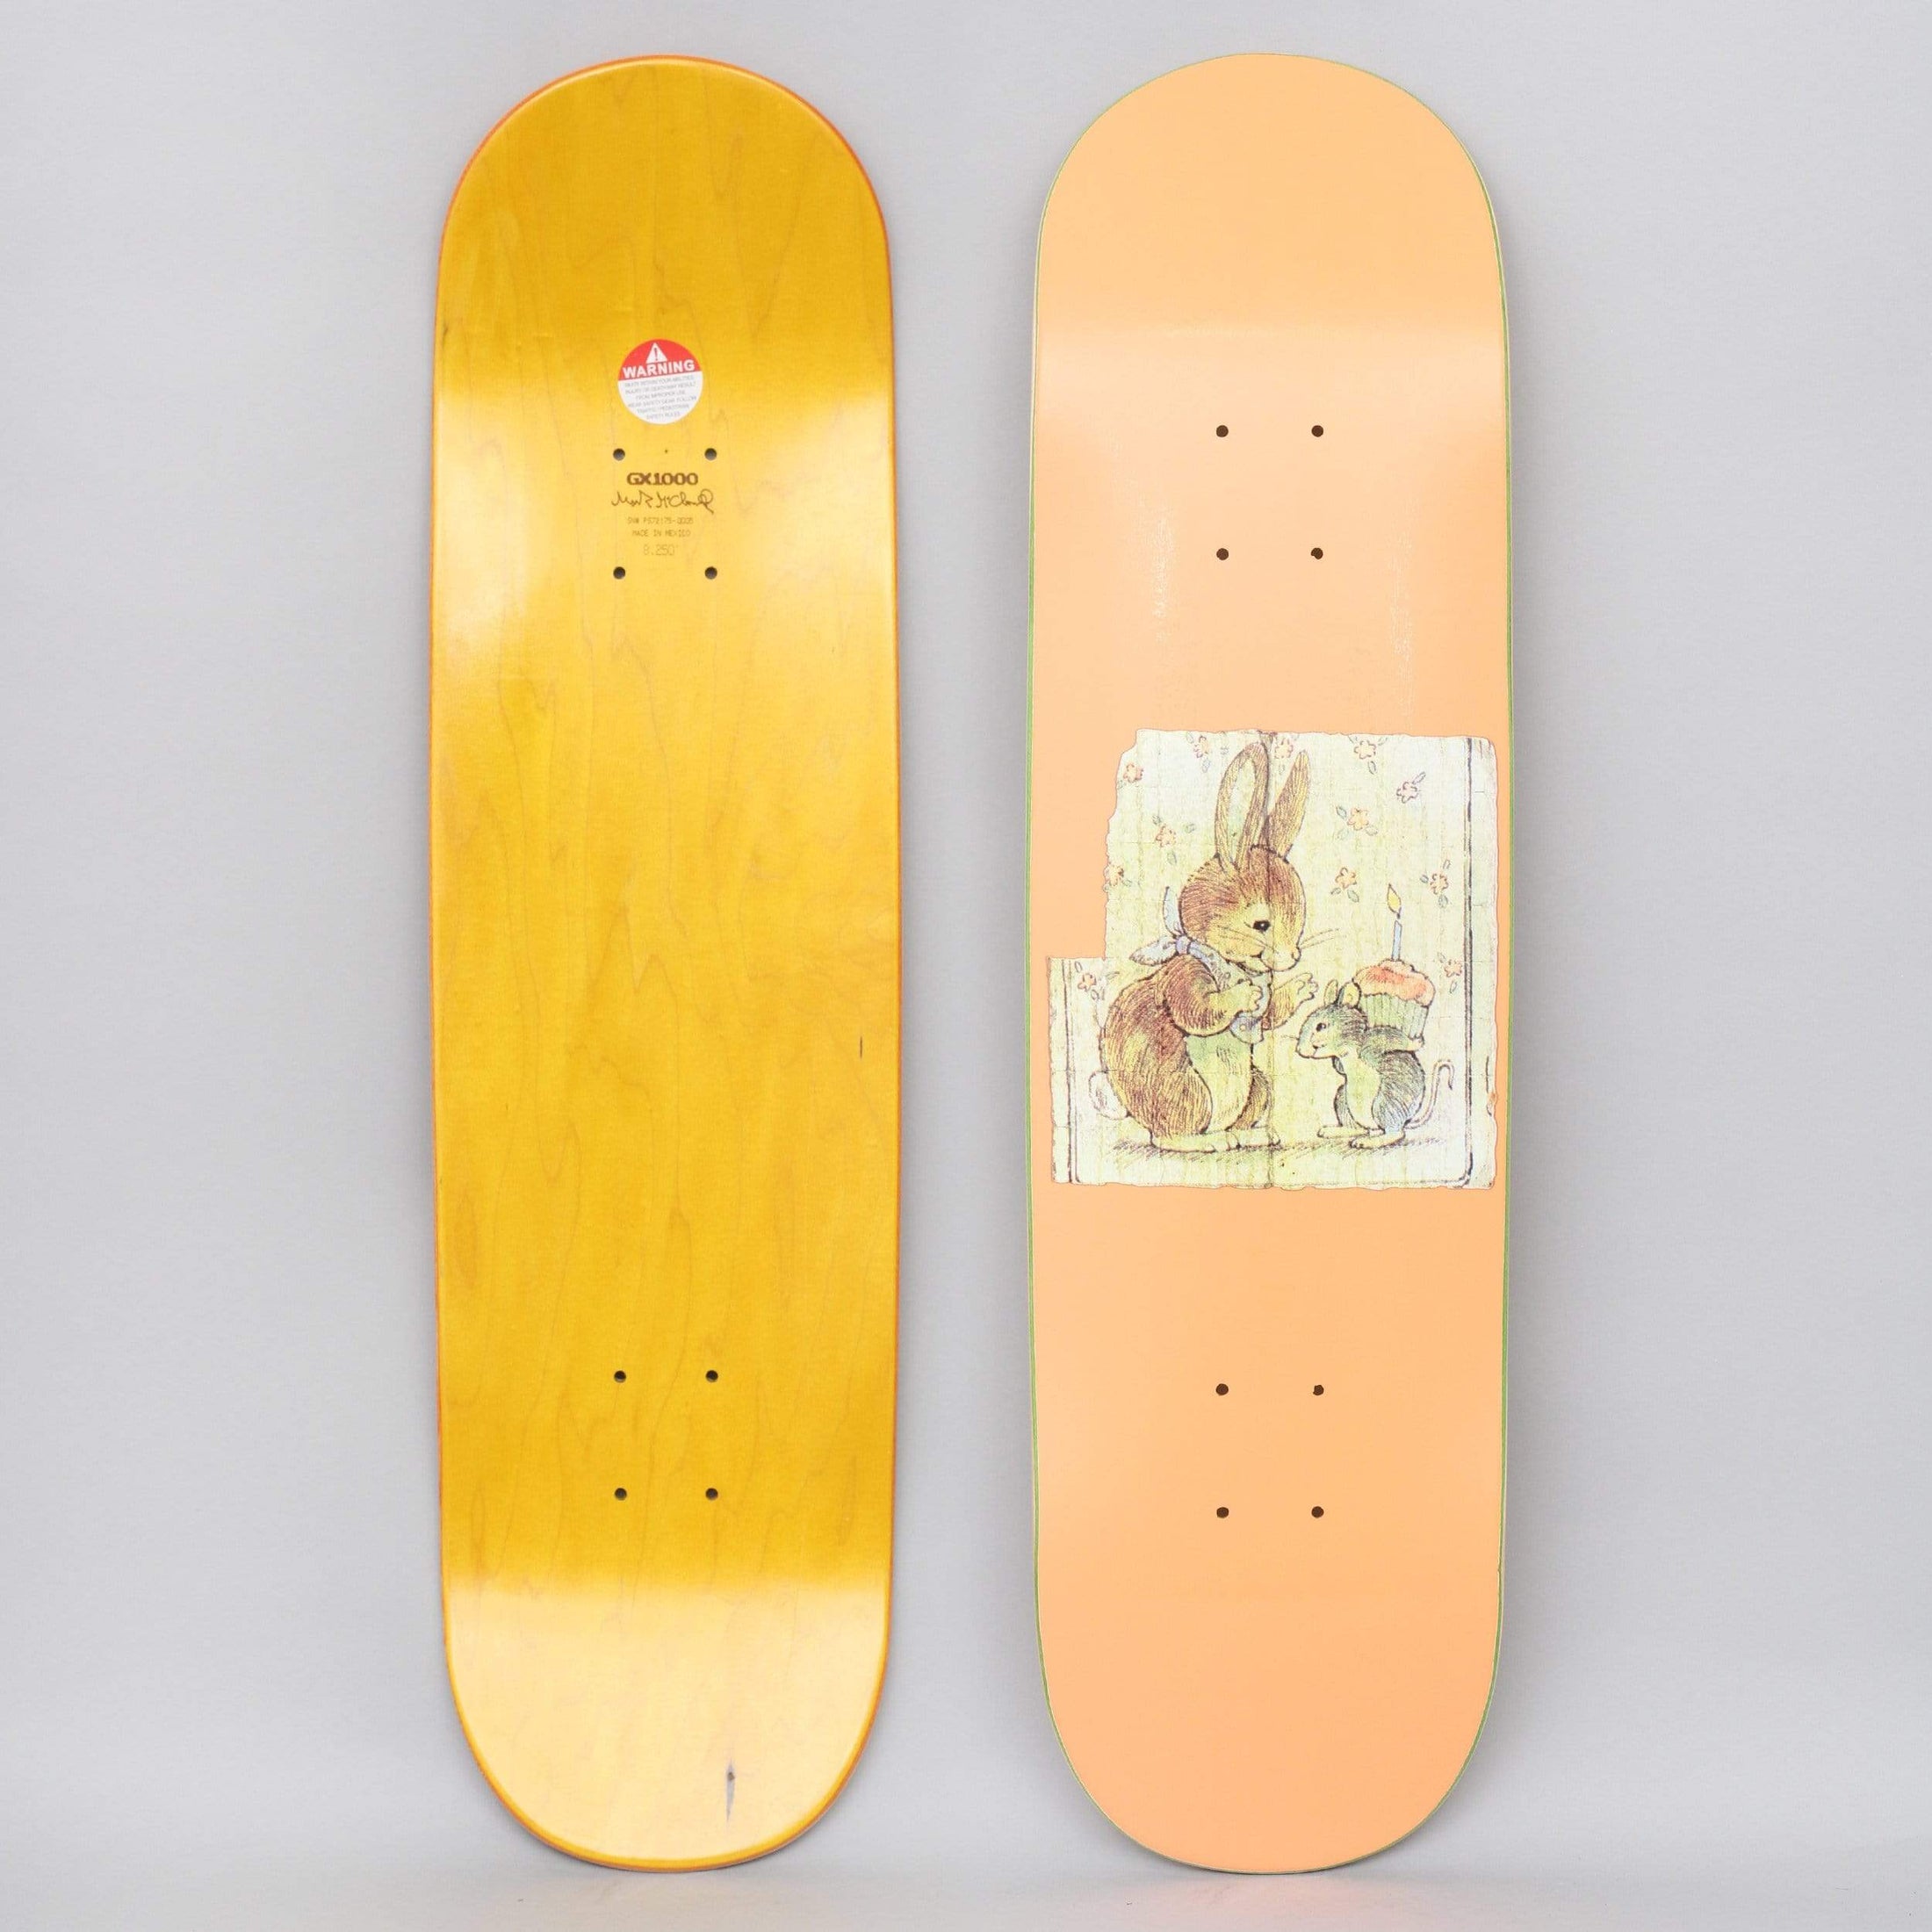 GX1000 8.25 Bunny Skateboard Deck Peach